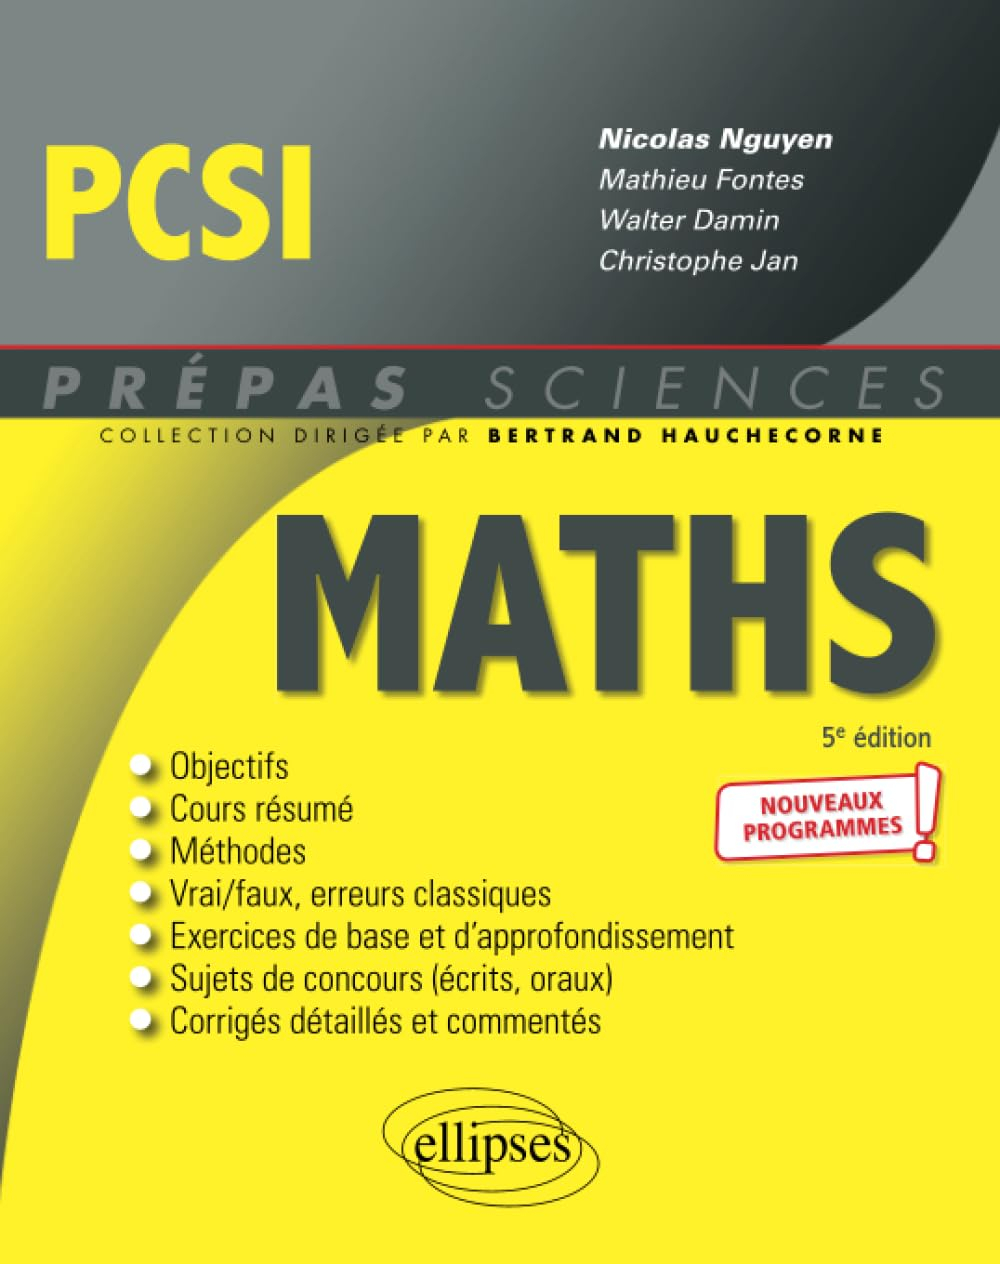 Maths PCSI : nouveaux programmes